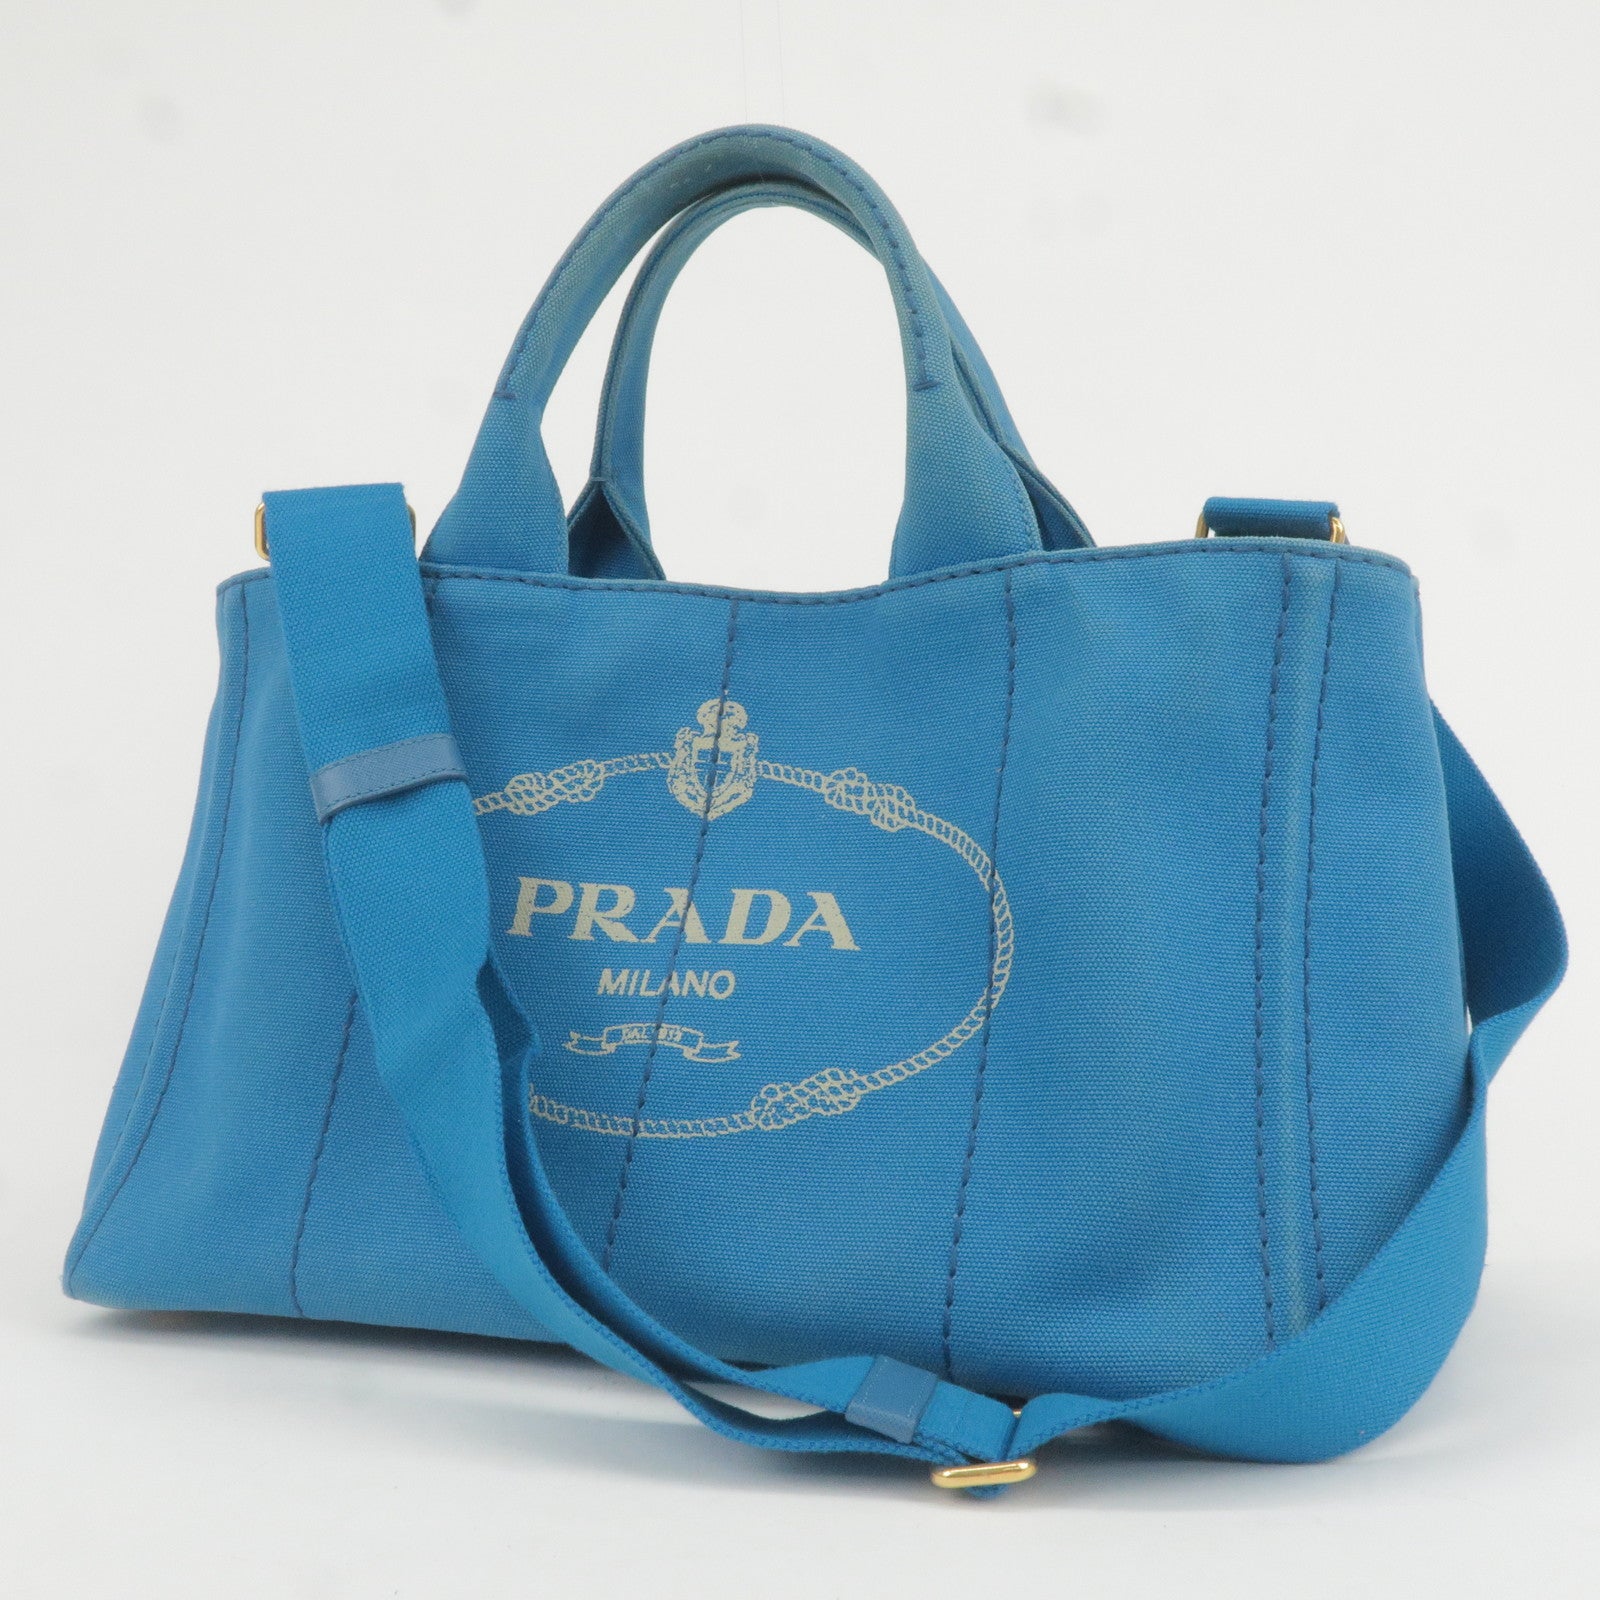 Prada nylon bag with triangular rubber logo